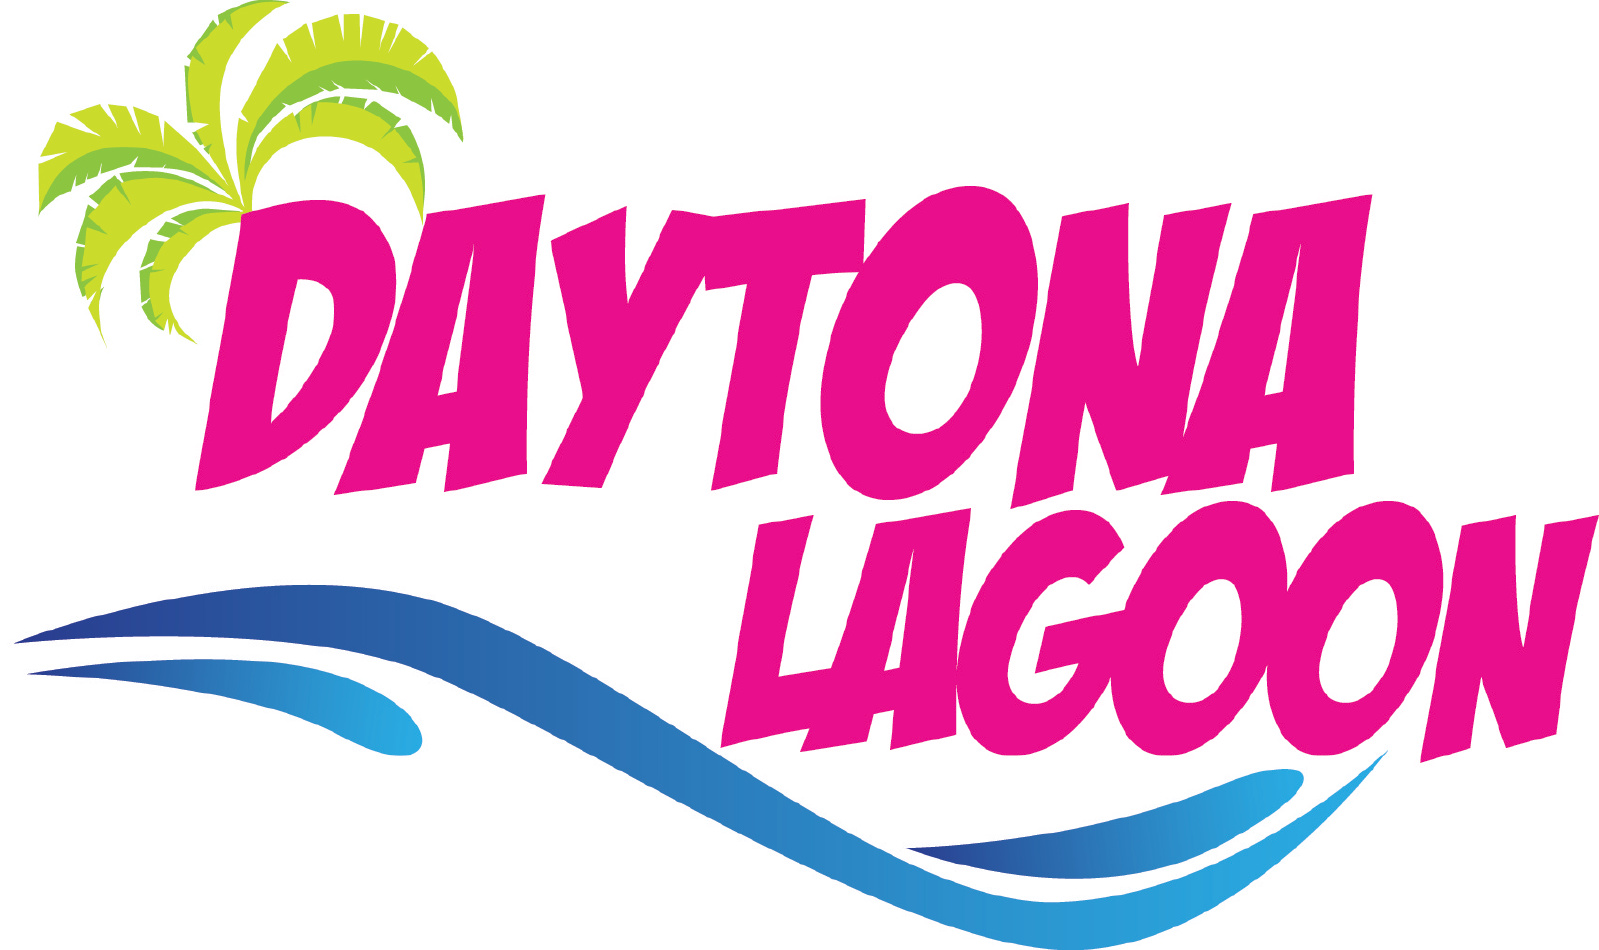 Daytona lagoon birthday party